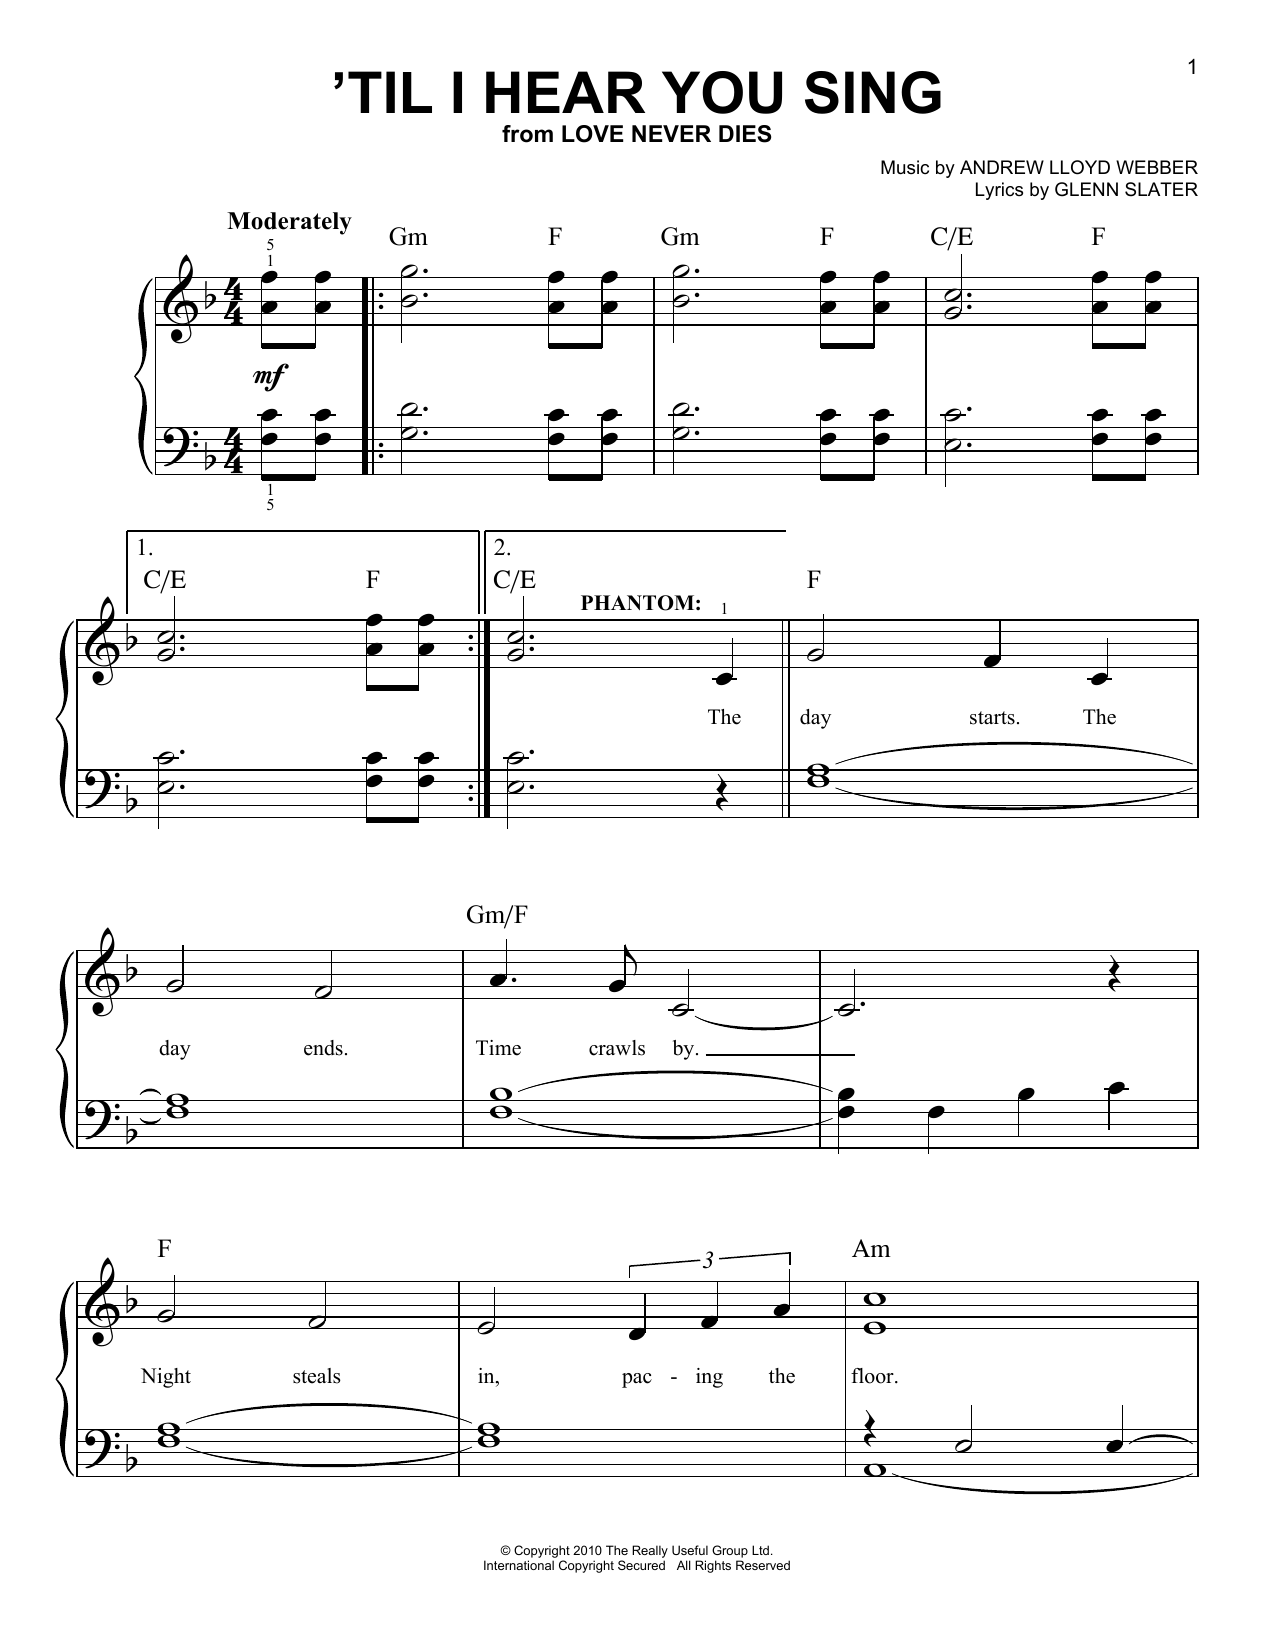 Andrew Lloyd Webber 'Til I Hear You Sing Sheet Music Notes & Chords for Super Easy Piano - Download or Print PDF